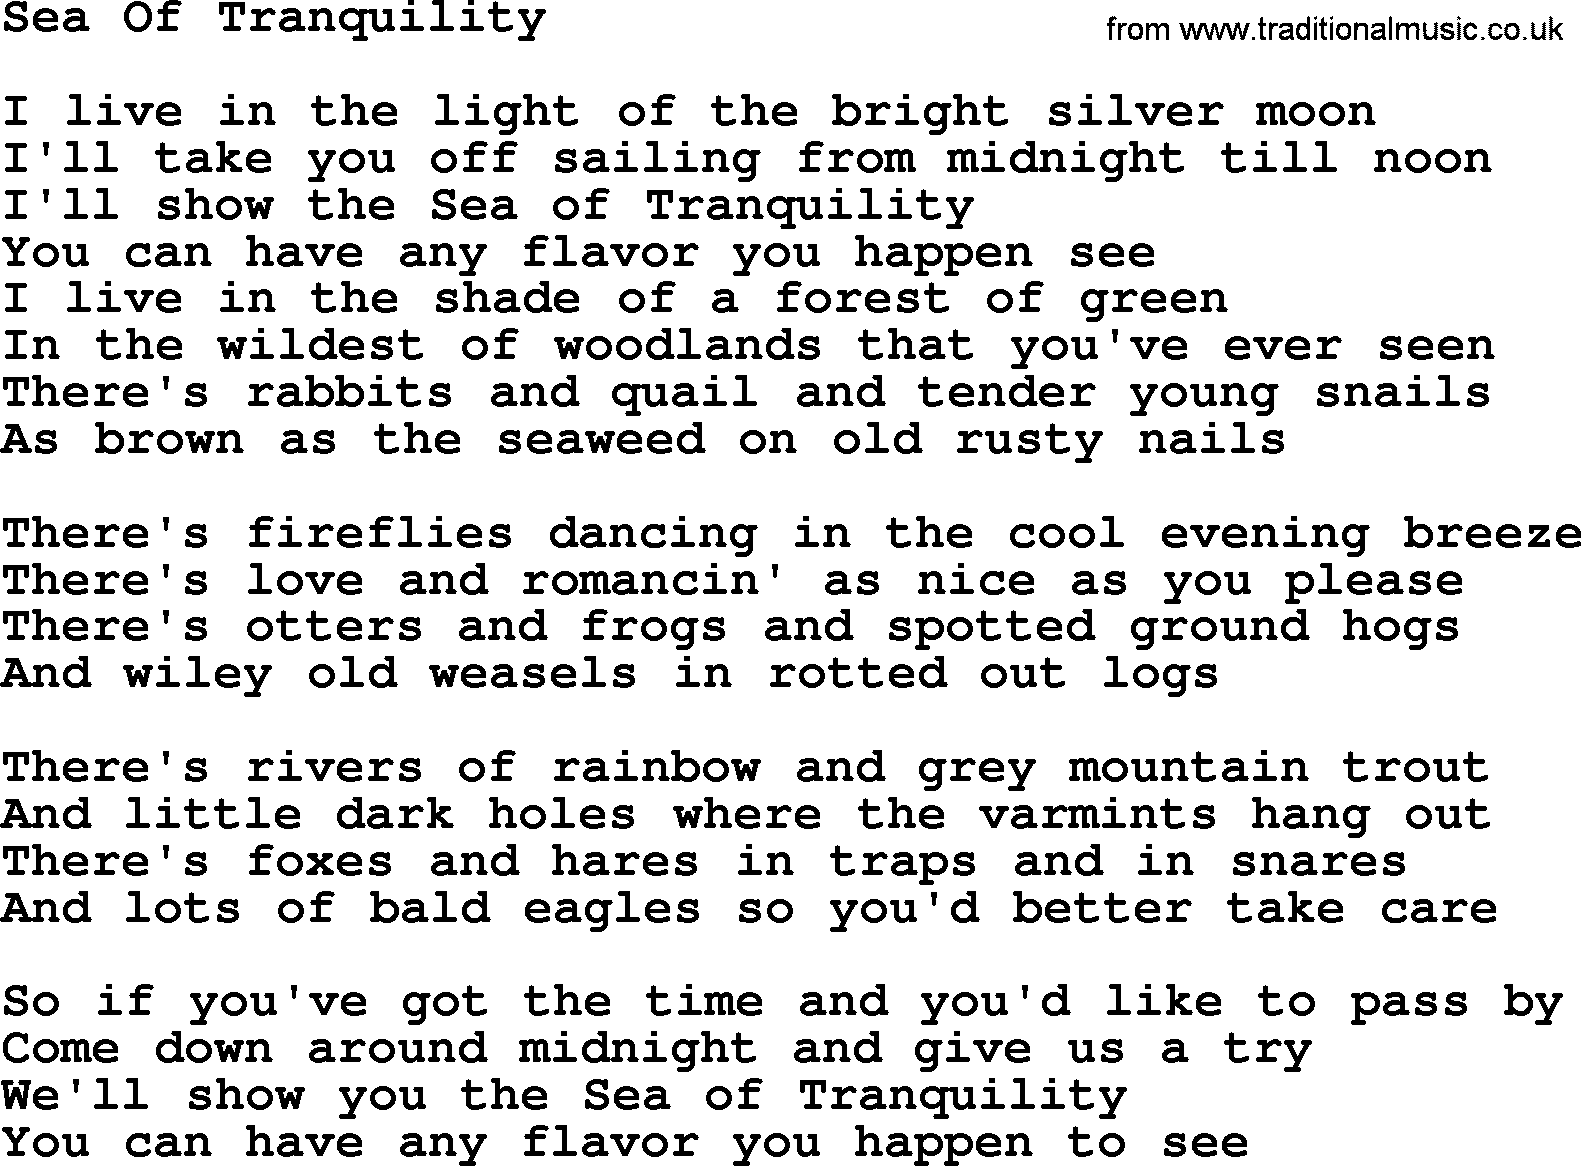 Gordon Lightfoot song Sea Of Tranquility, lyrics